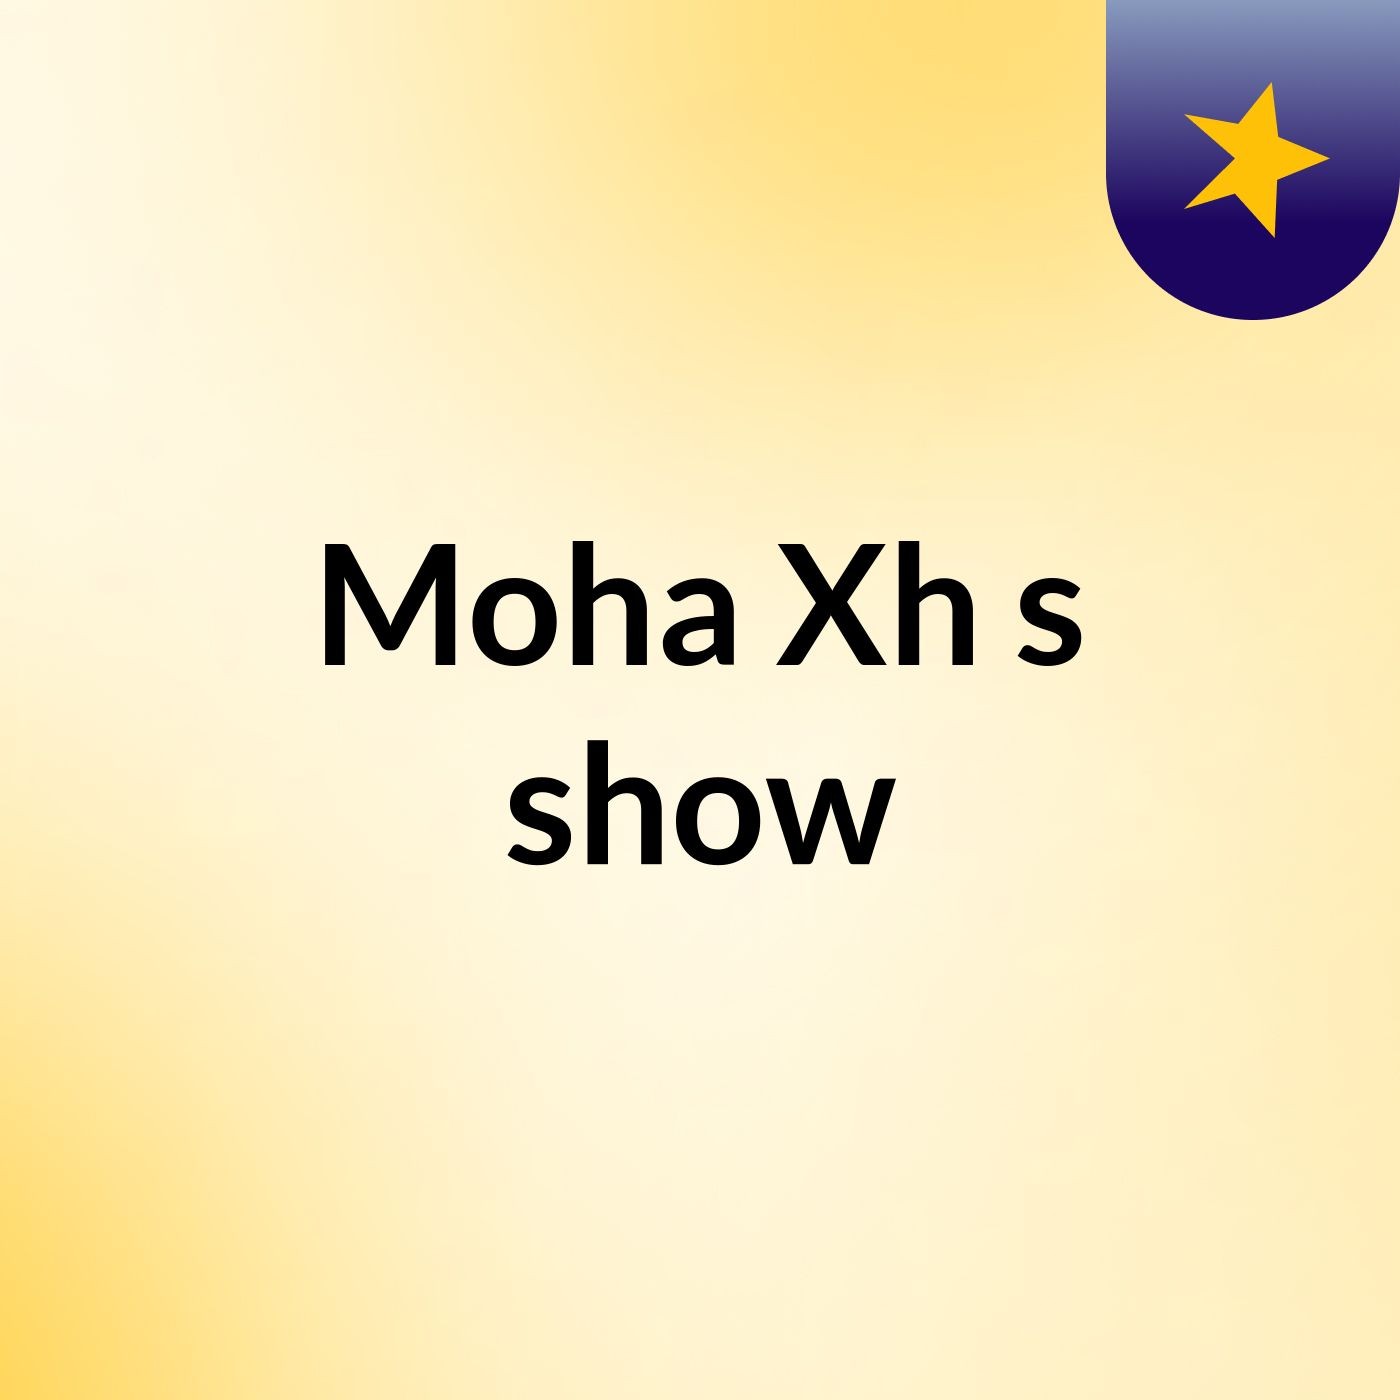 Moha Xh's show